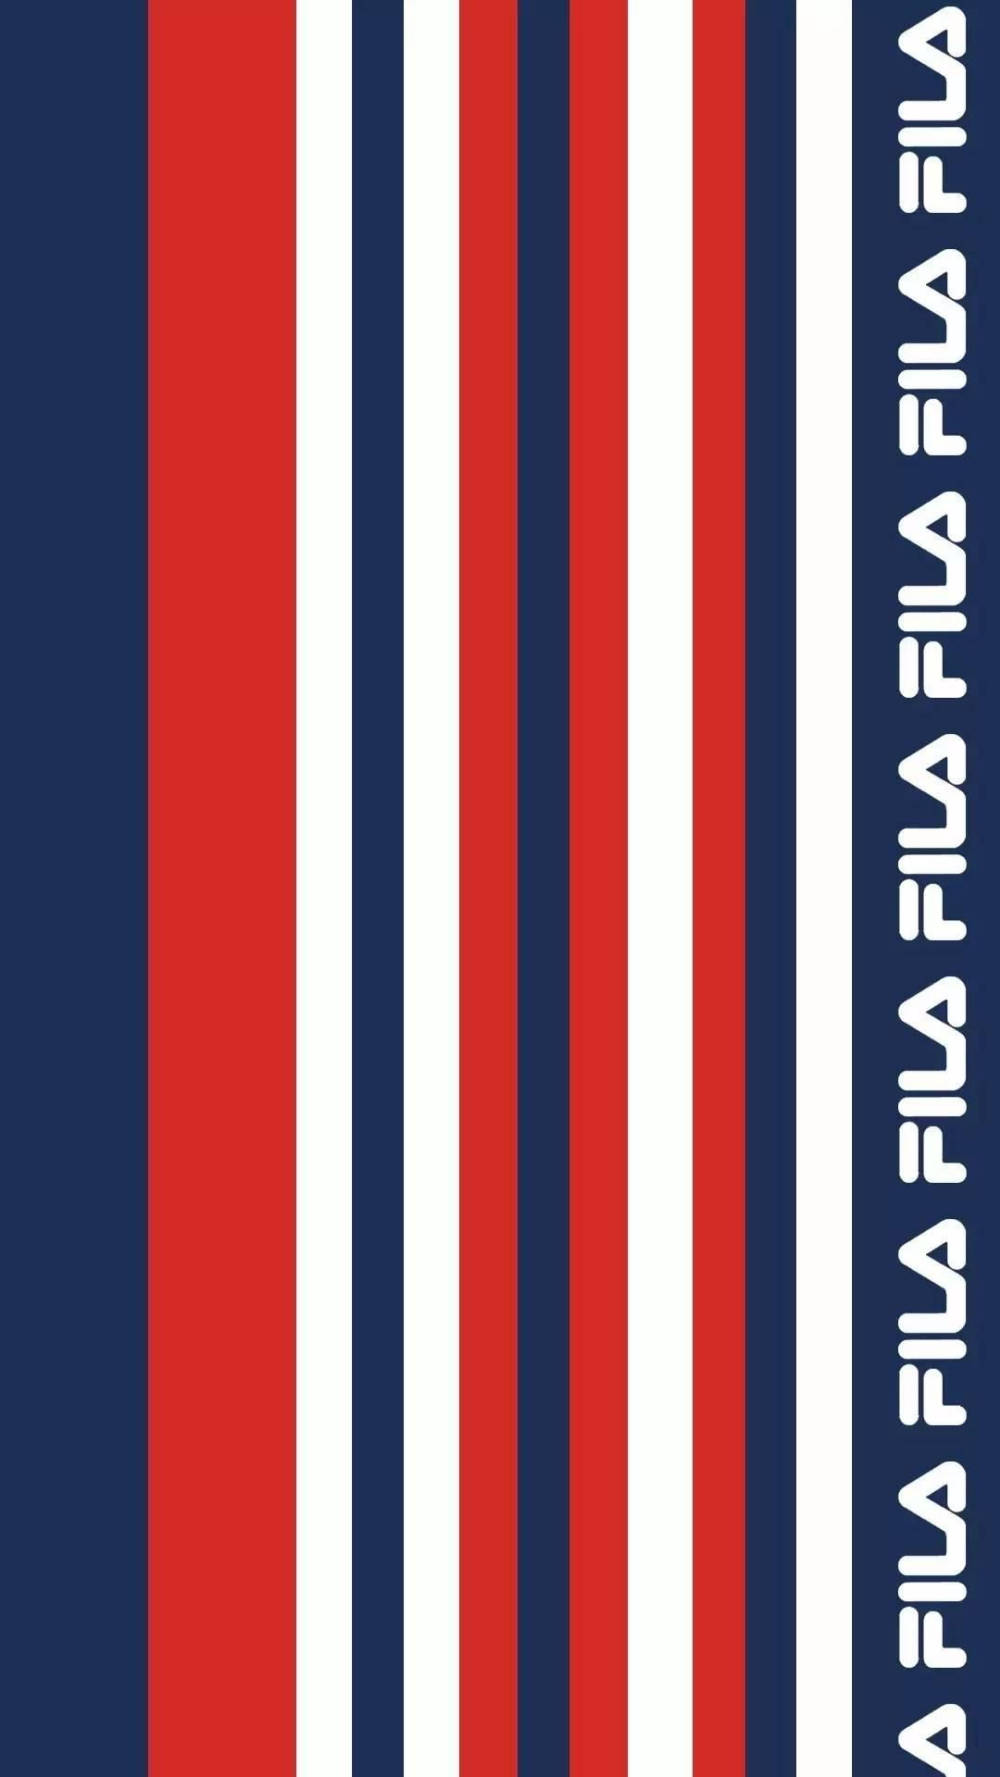 Fila Vertical Stripes Wallpaper